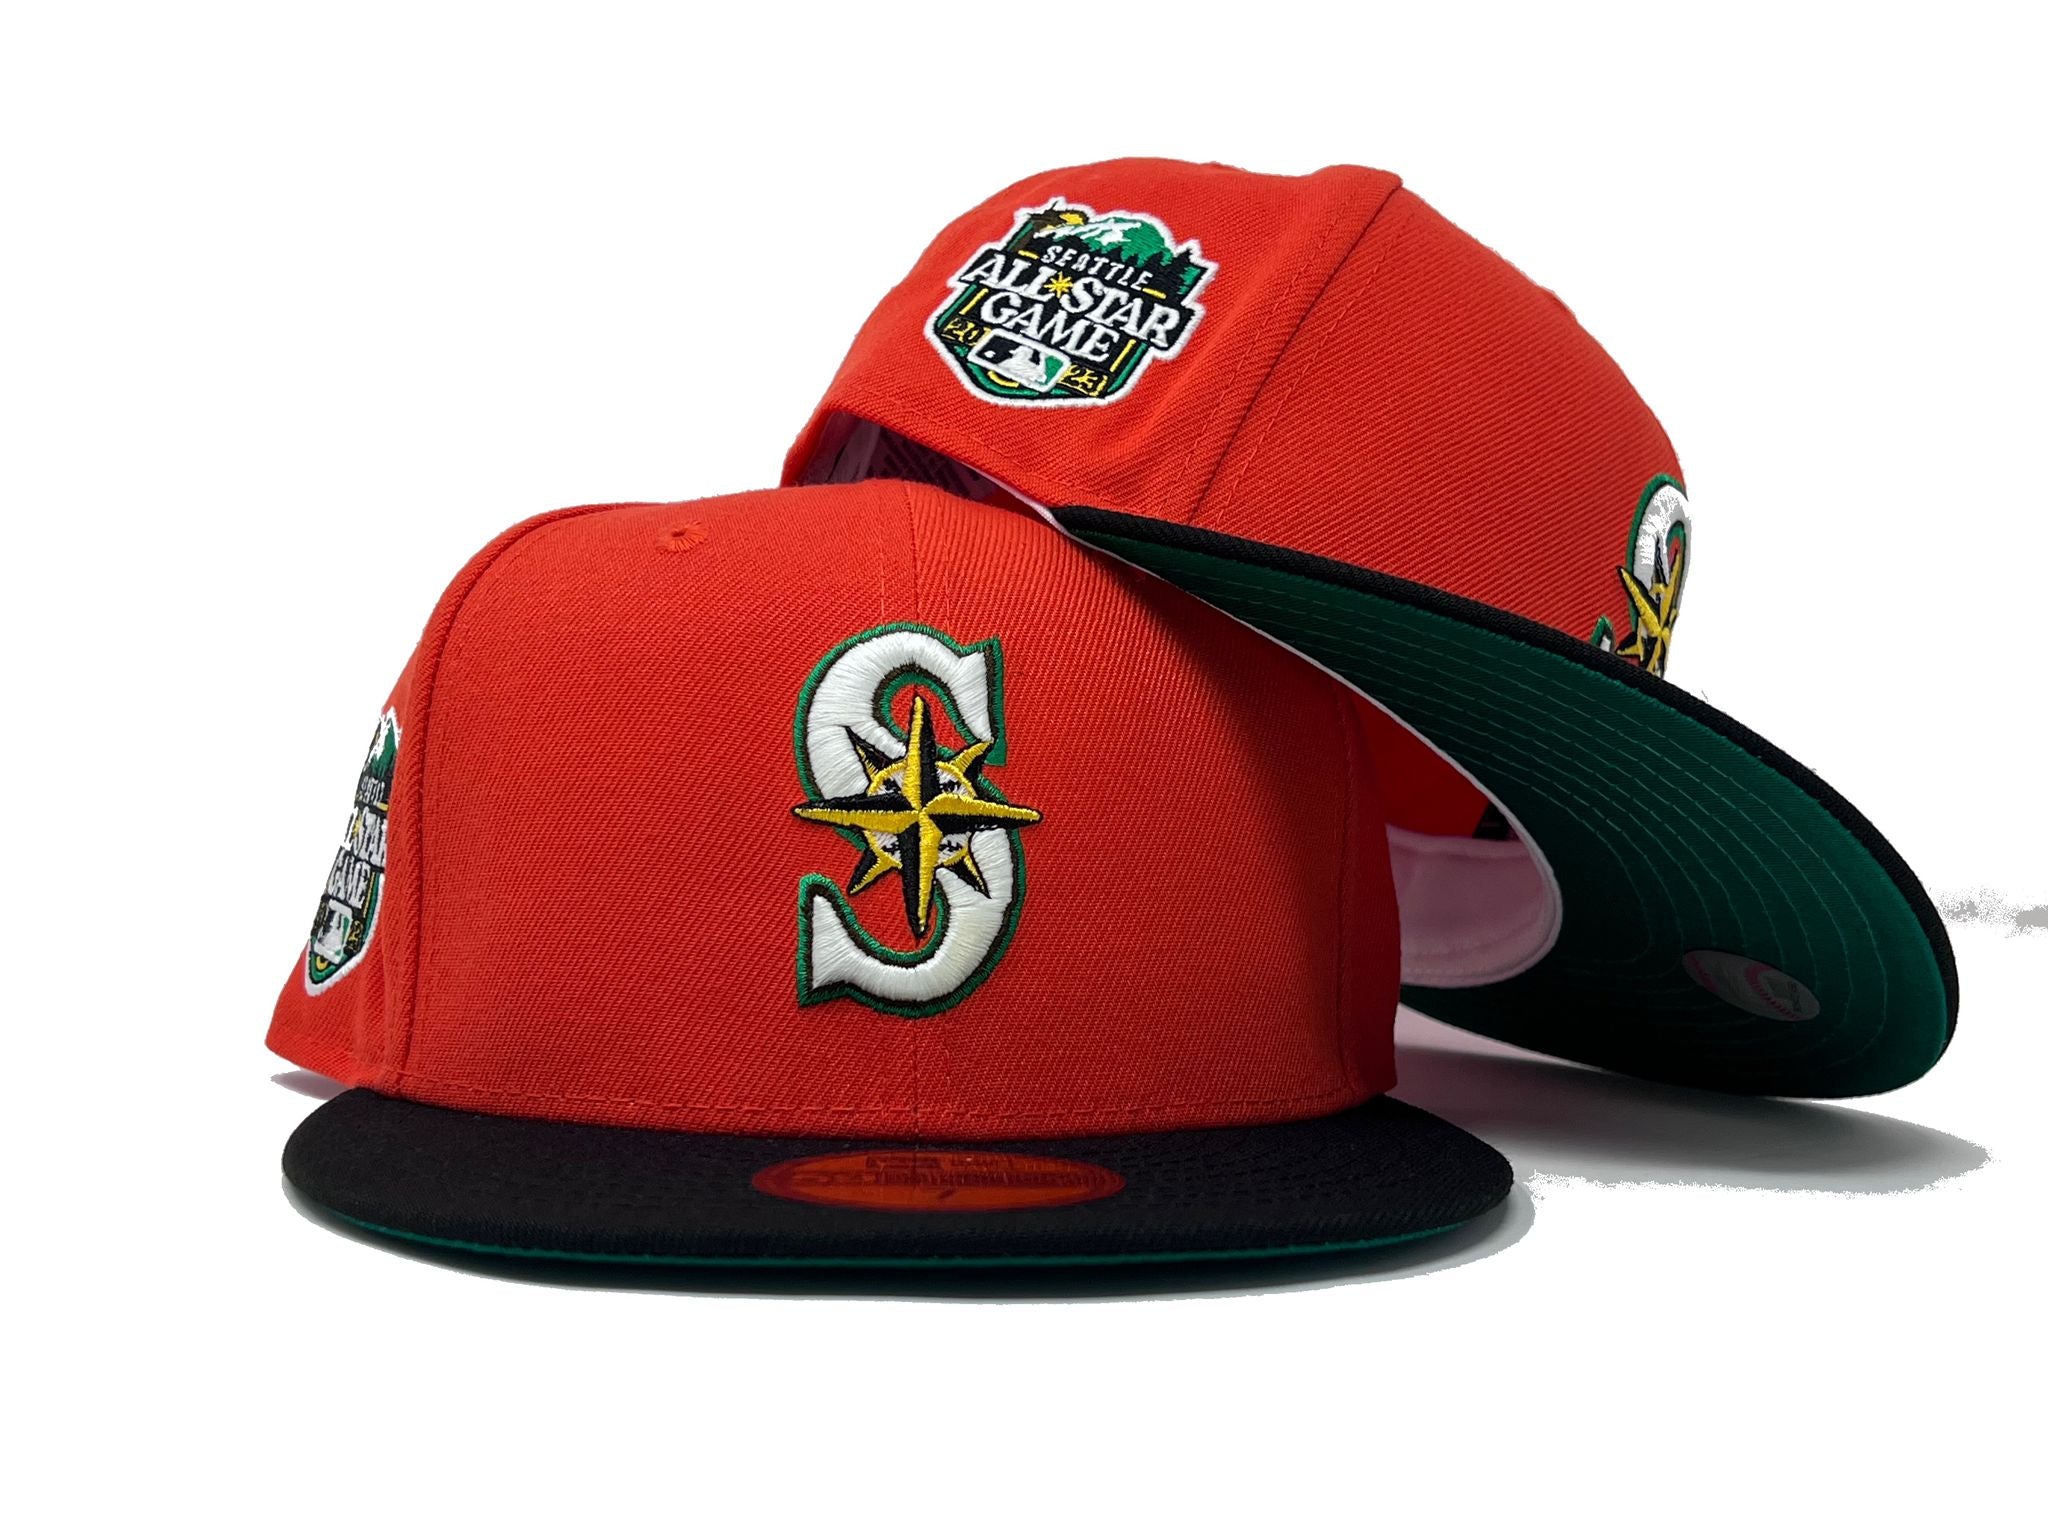 Hat Club - The Throwback Seattle Mariners Northwest Green fitted hits  Hatclub.com tomorrow at 11am PST. #hatclub #myhatclub